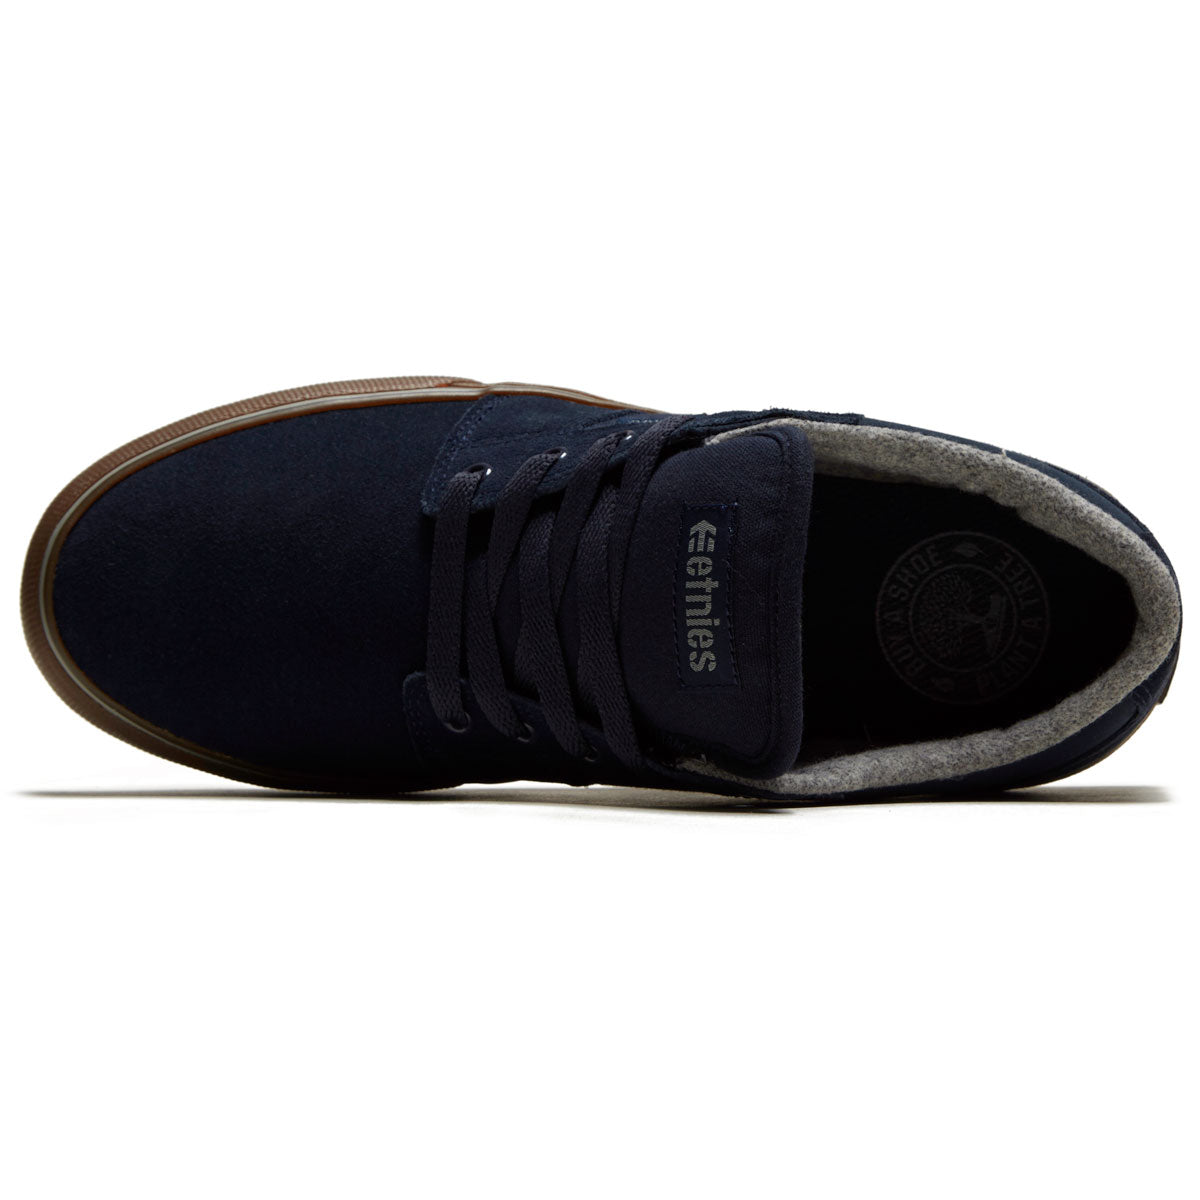 Etnies Barge Ls Shoes - Dark Blue/Gum image 3